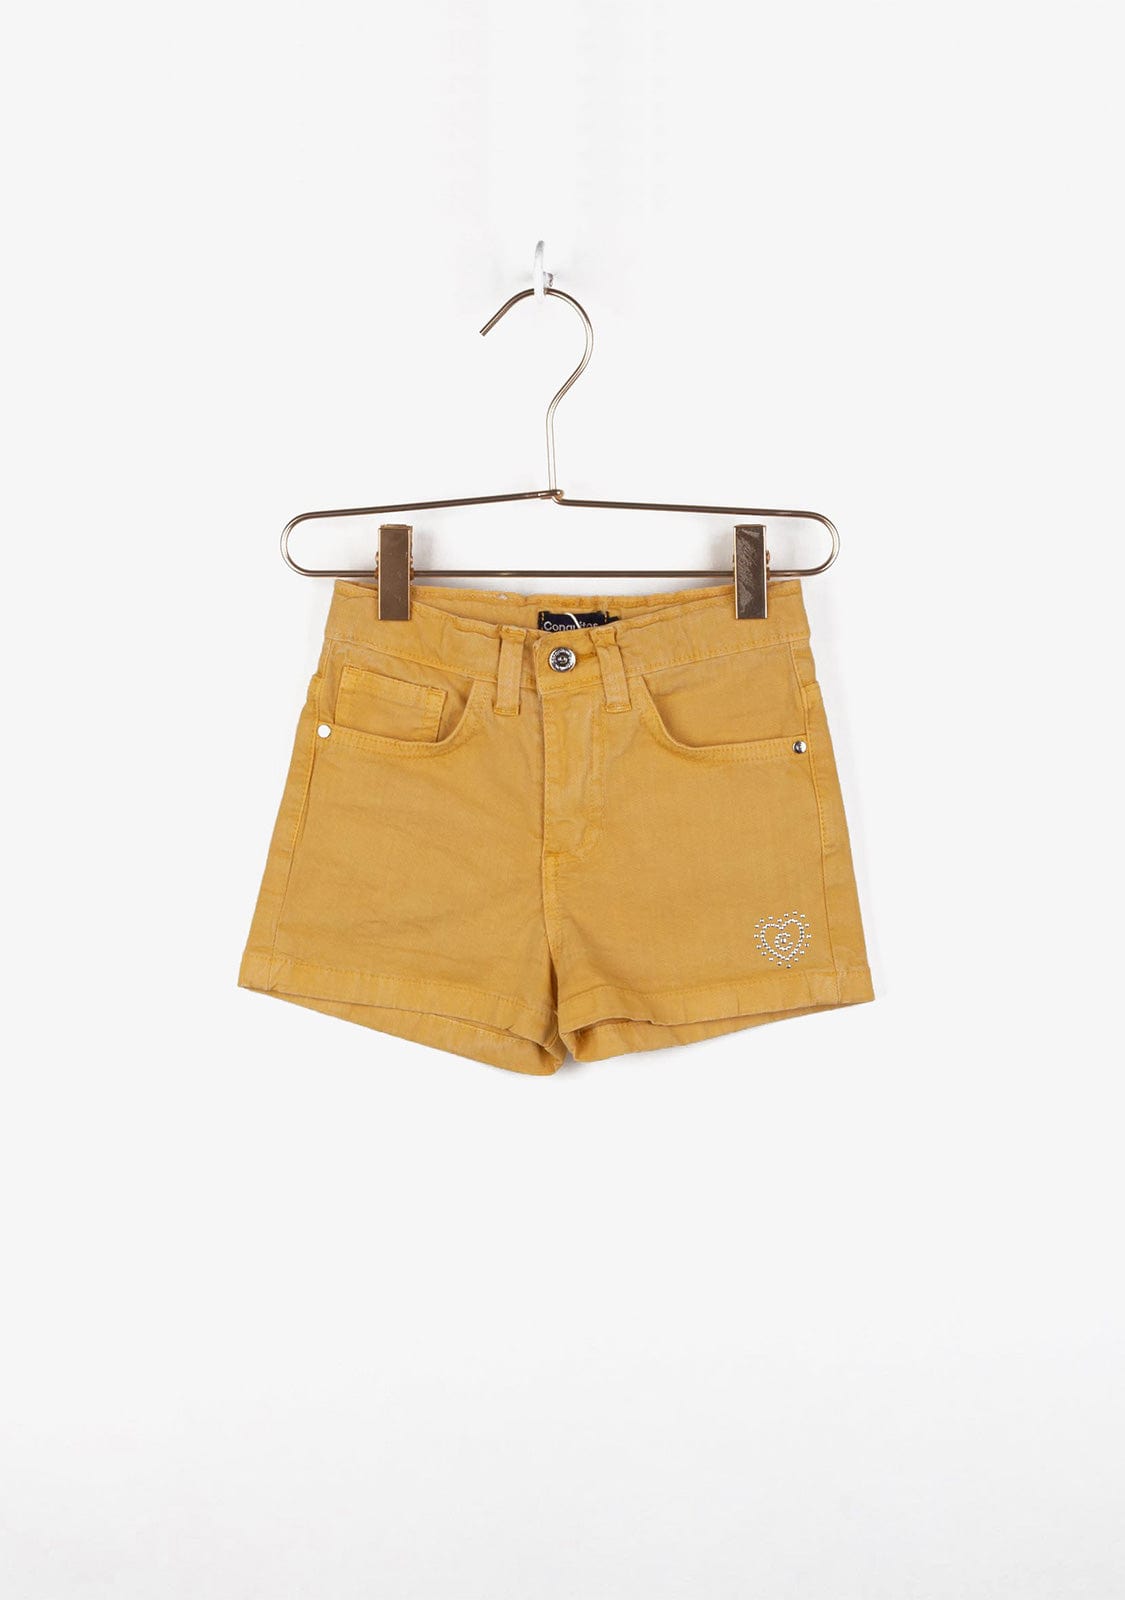 CONGUITOS TEXTIL Clothing Girl's Mustard Basic Shorts